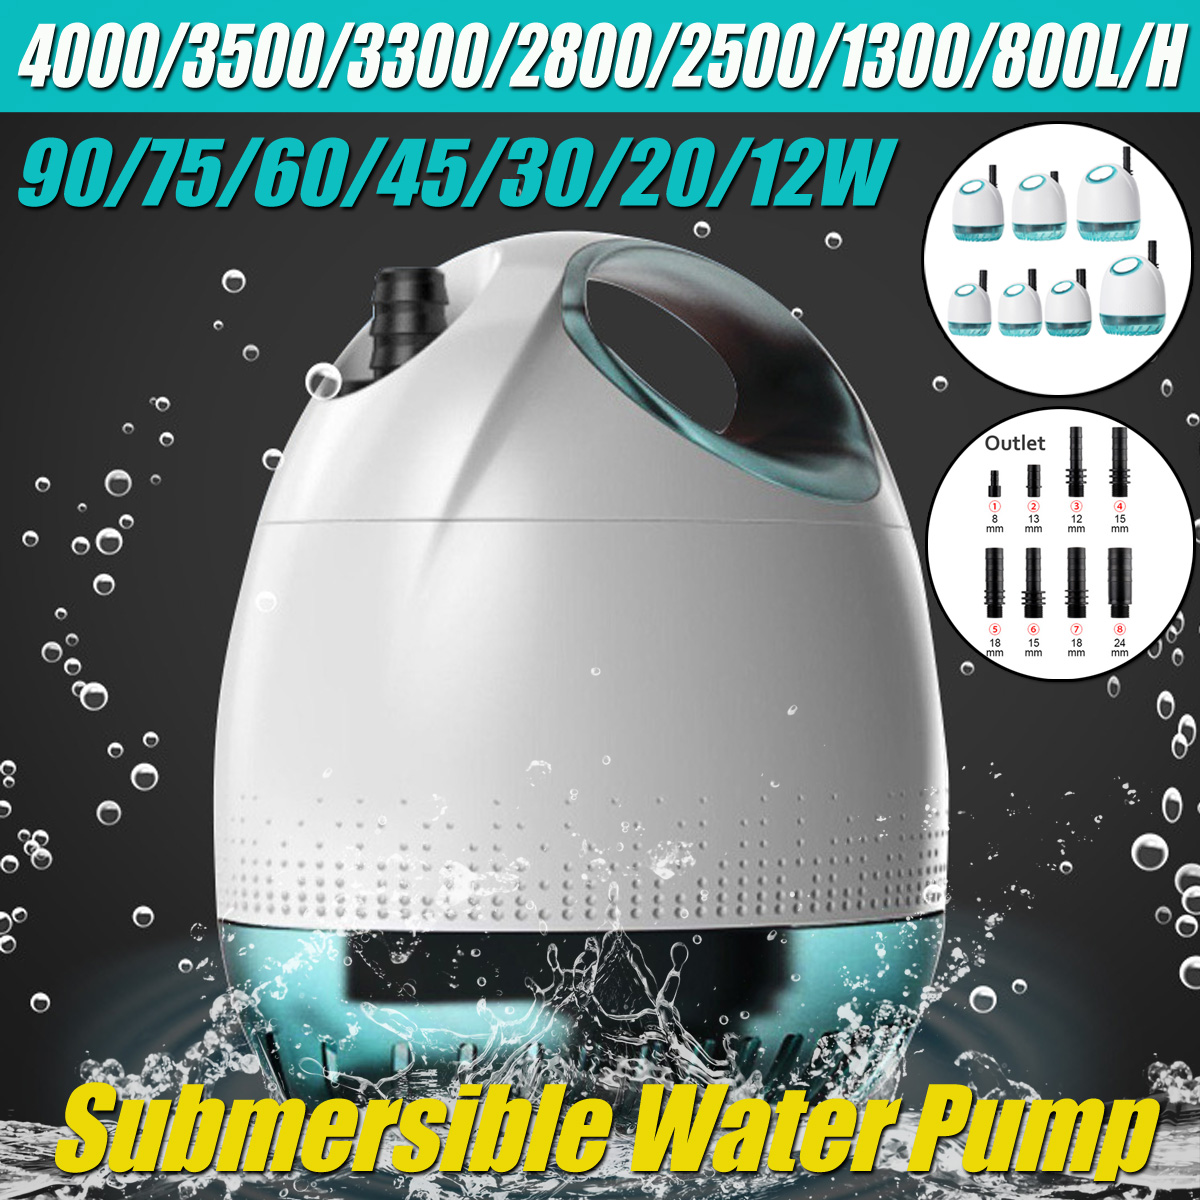 12-90W-Submersible-Water-Pump-800Lh-4000Lh-Ultra-Quiet-Waterproof-Aquariums-Ponds-Bottom-Suction-Wat-1569830-1